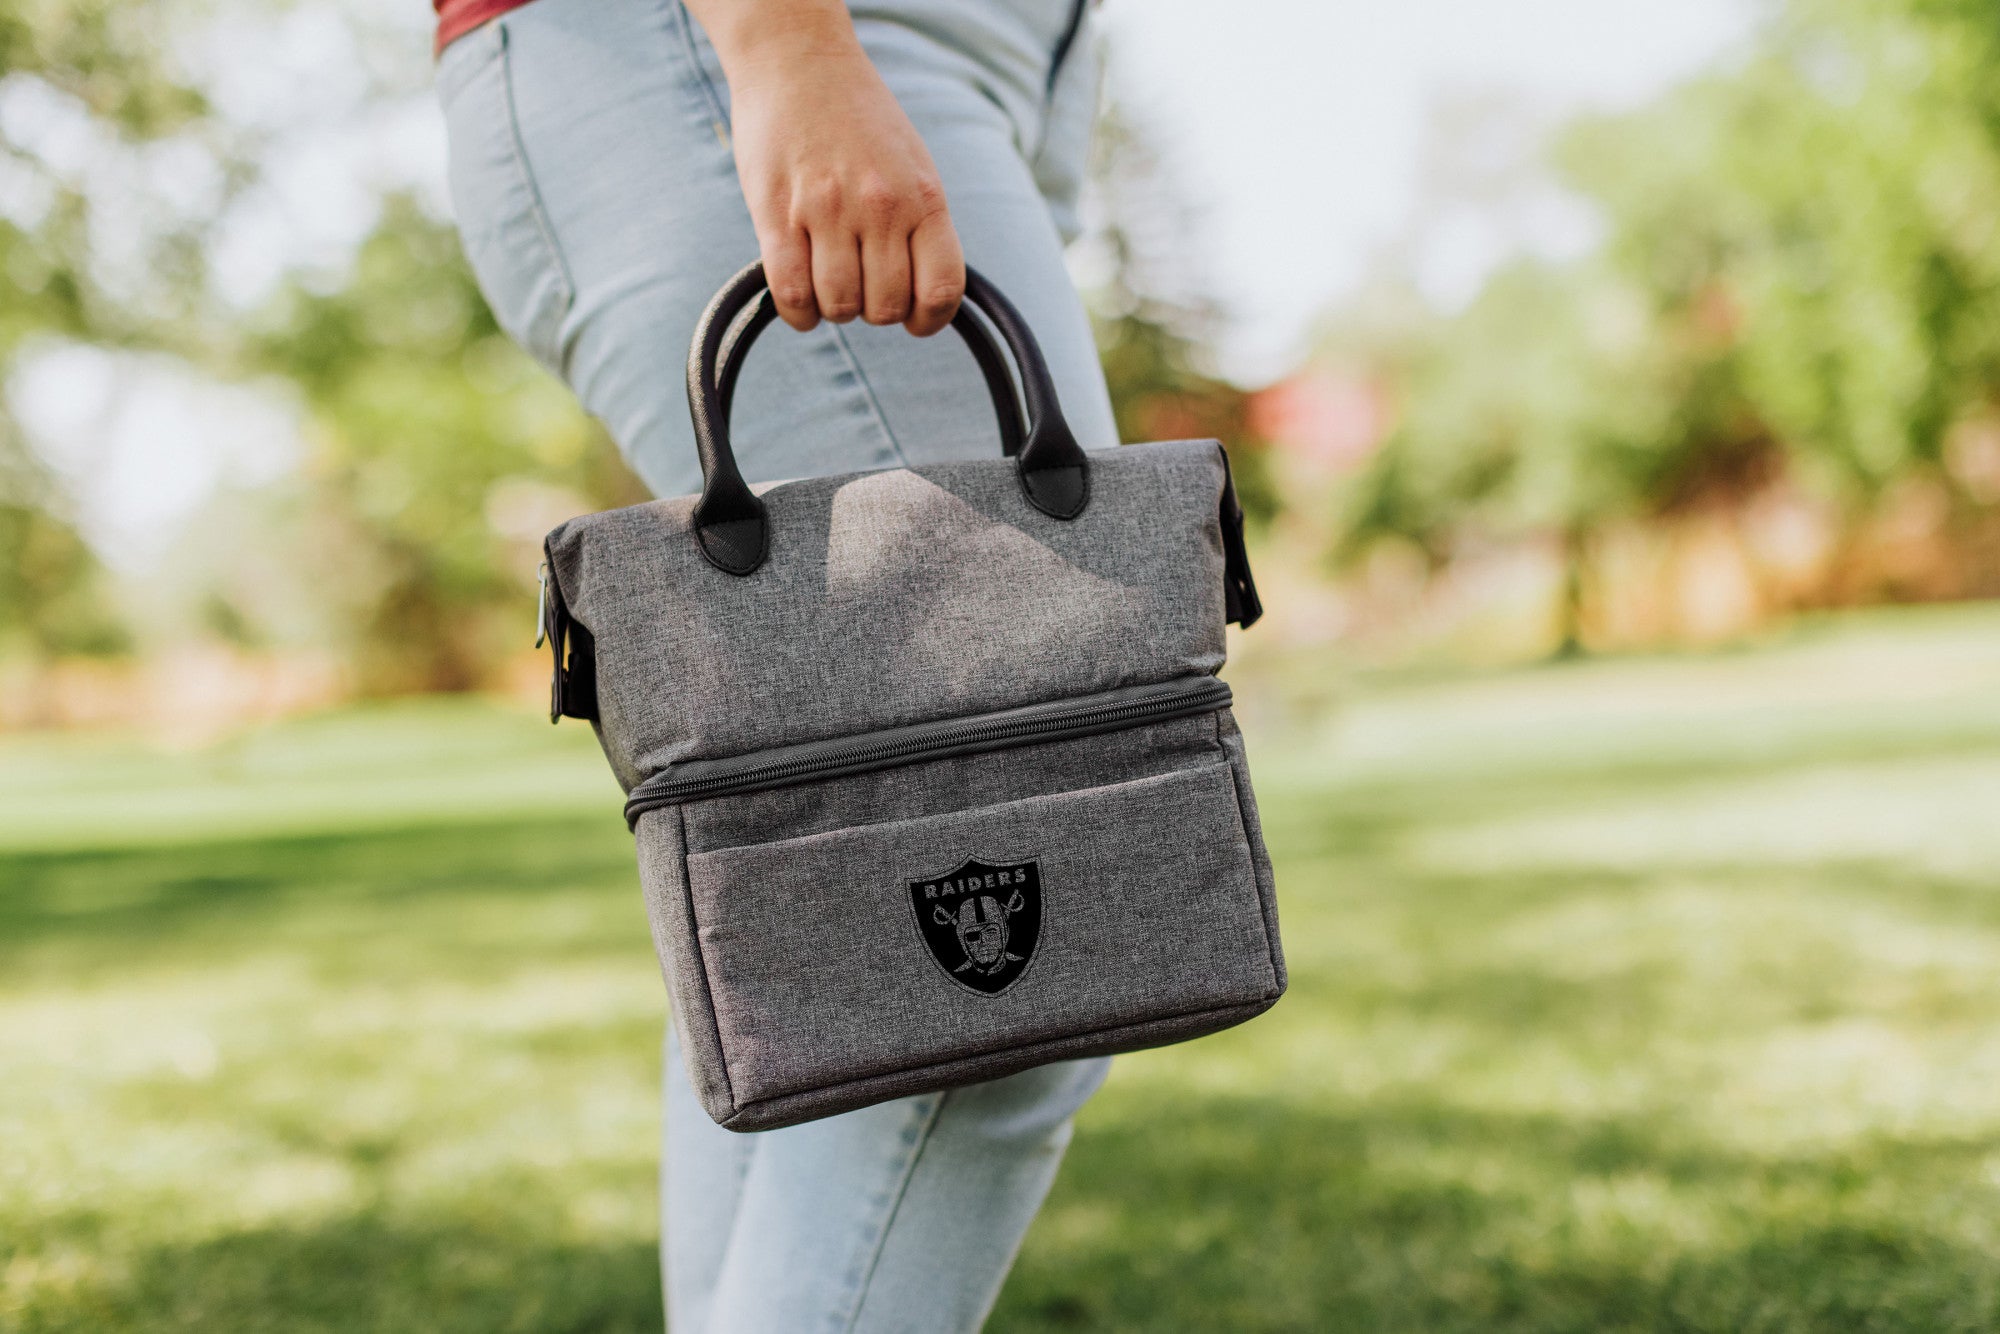 Las Vegas Raiders - Urban Lunch Bag Cooler